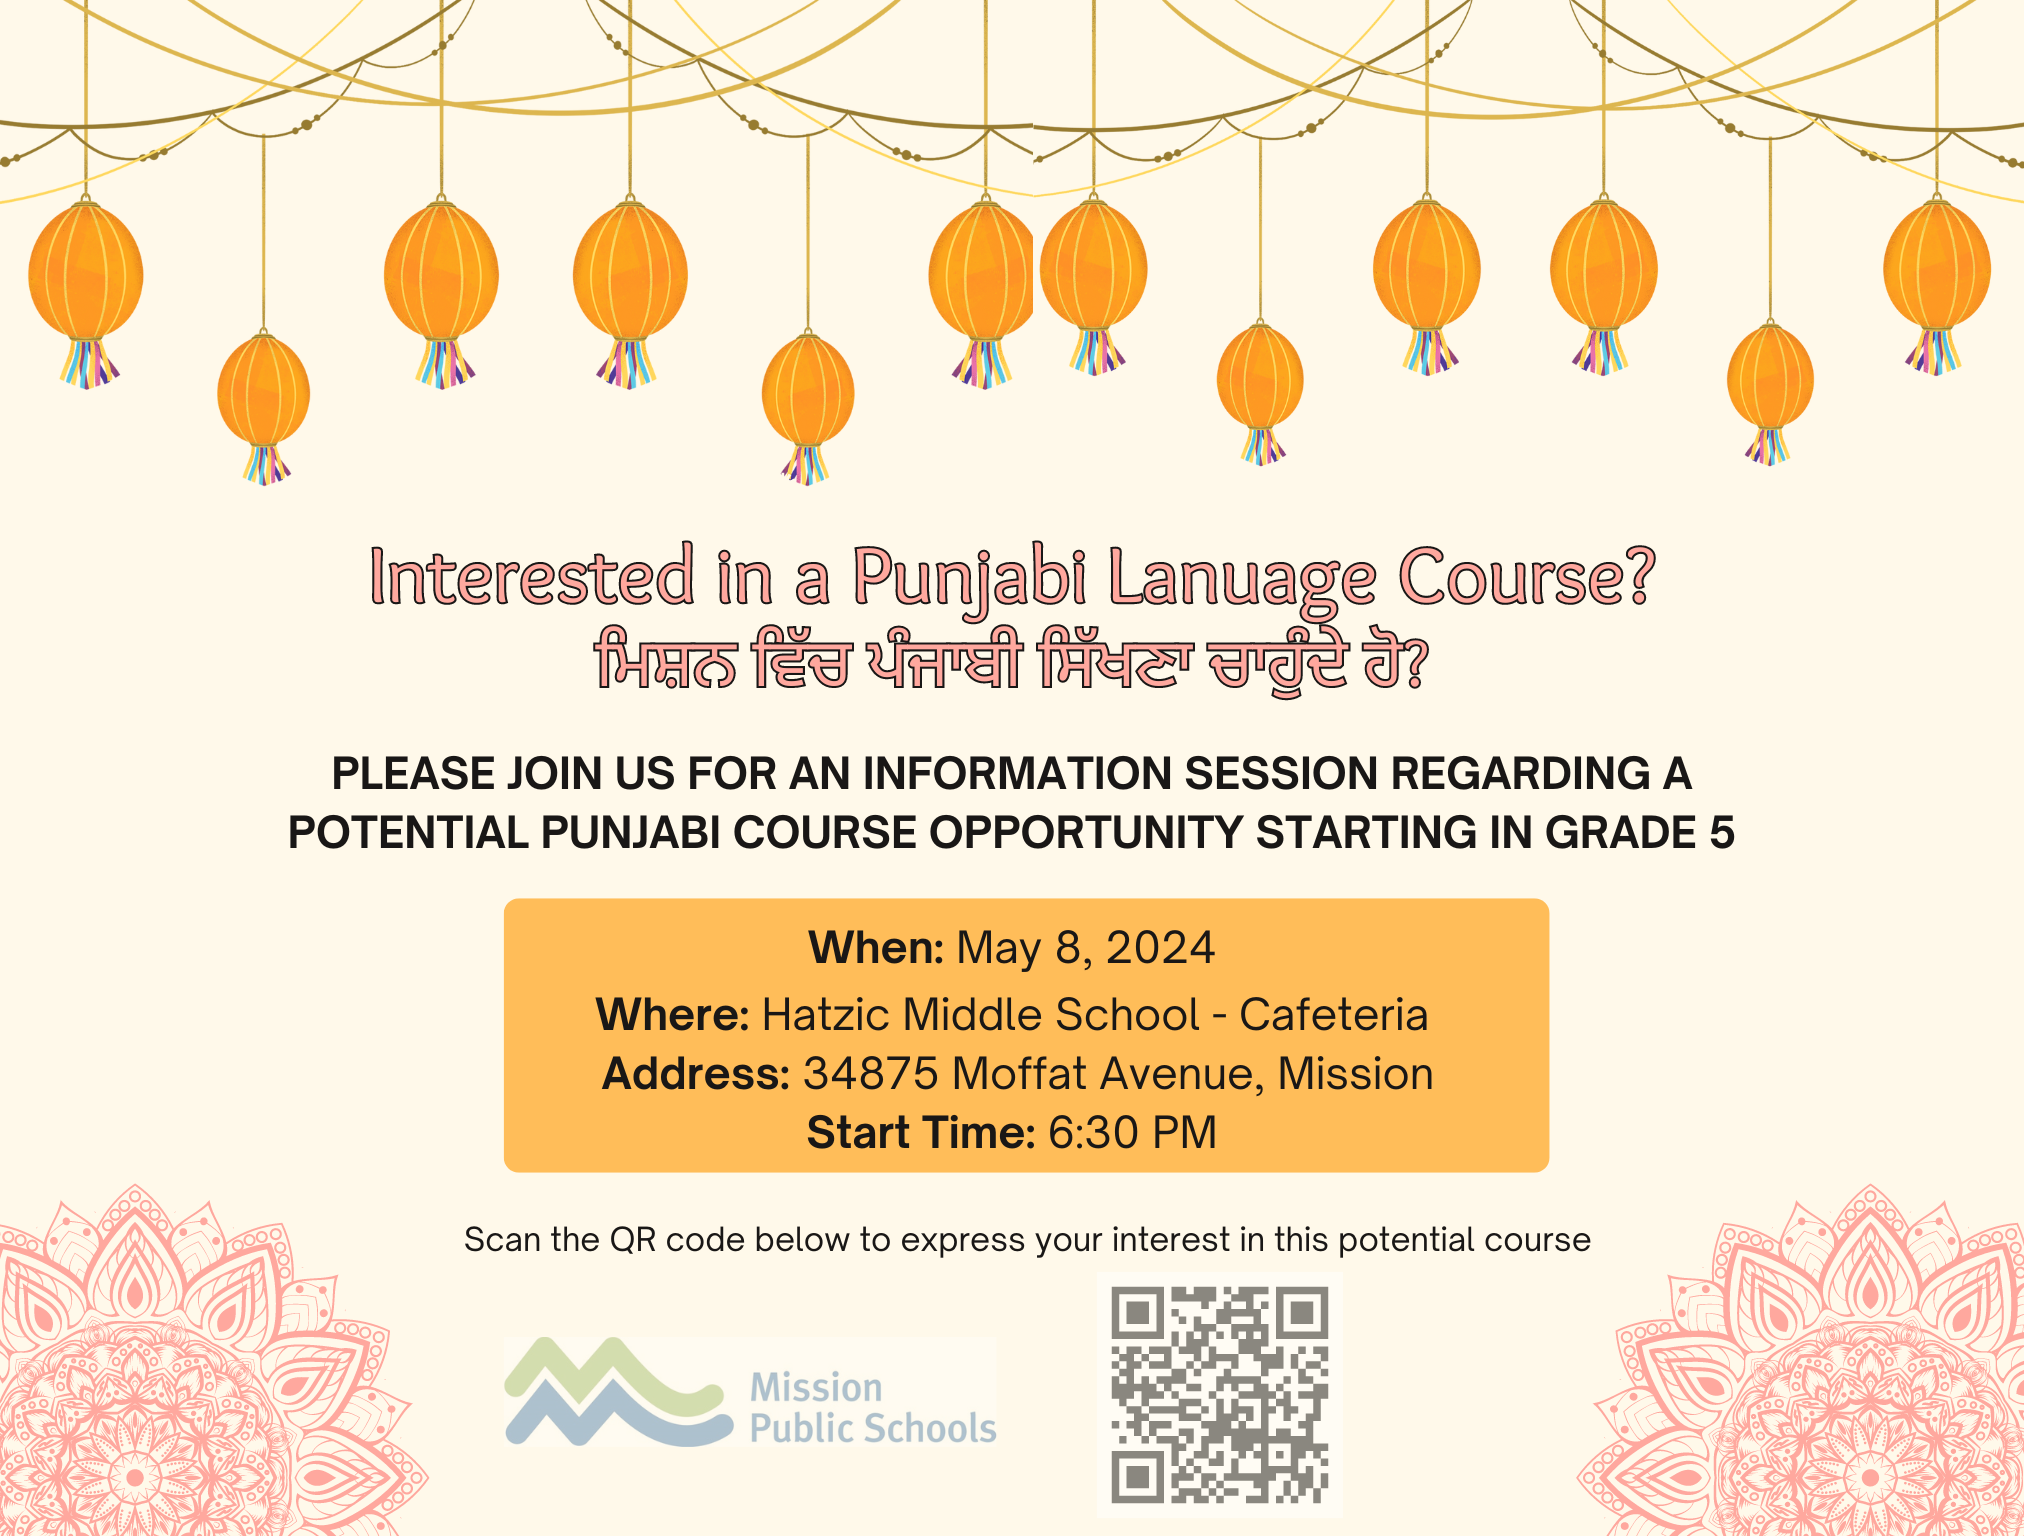  Information Session Regarding Potential Punjabi Course